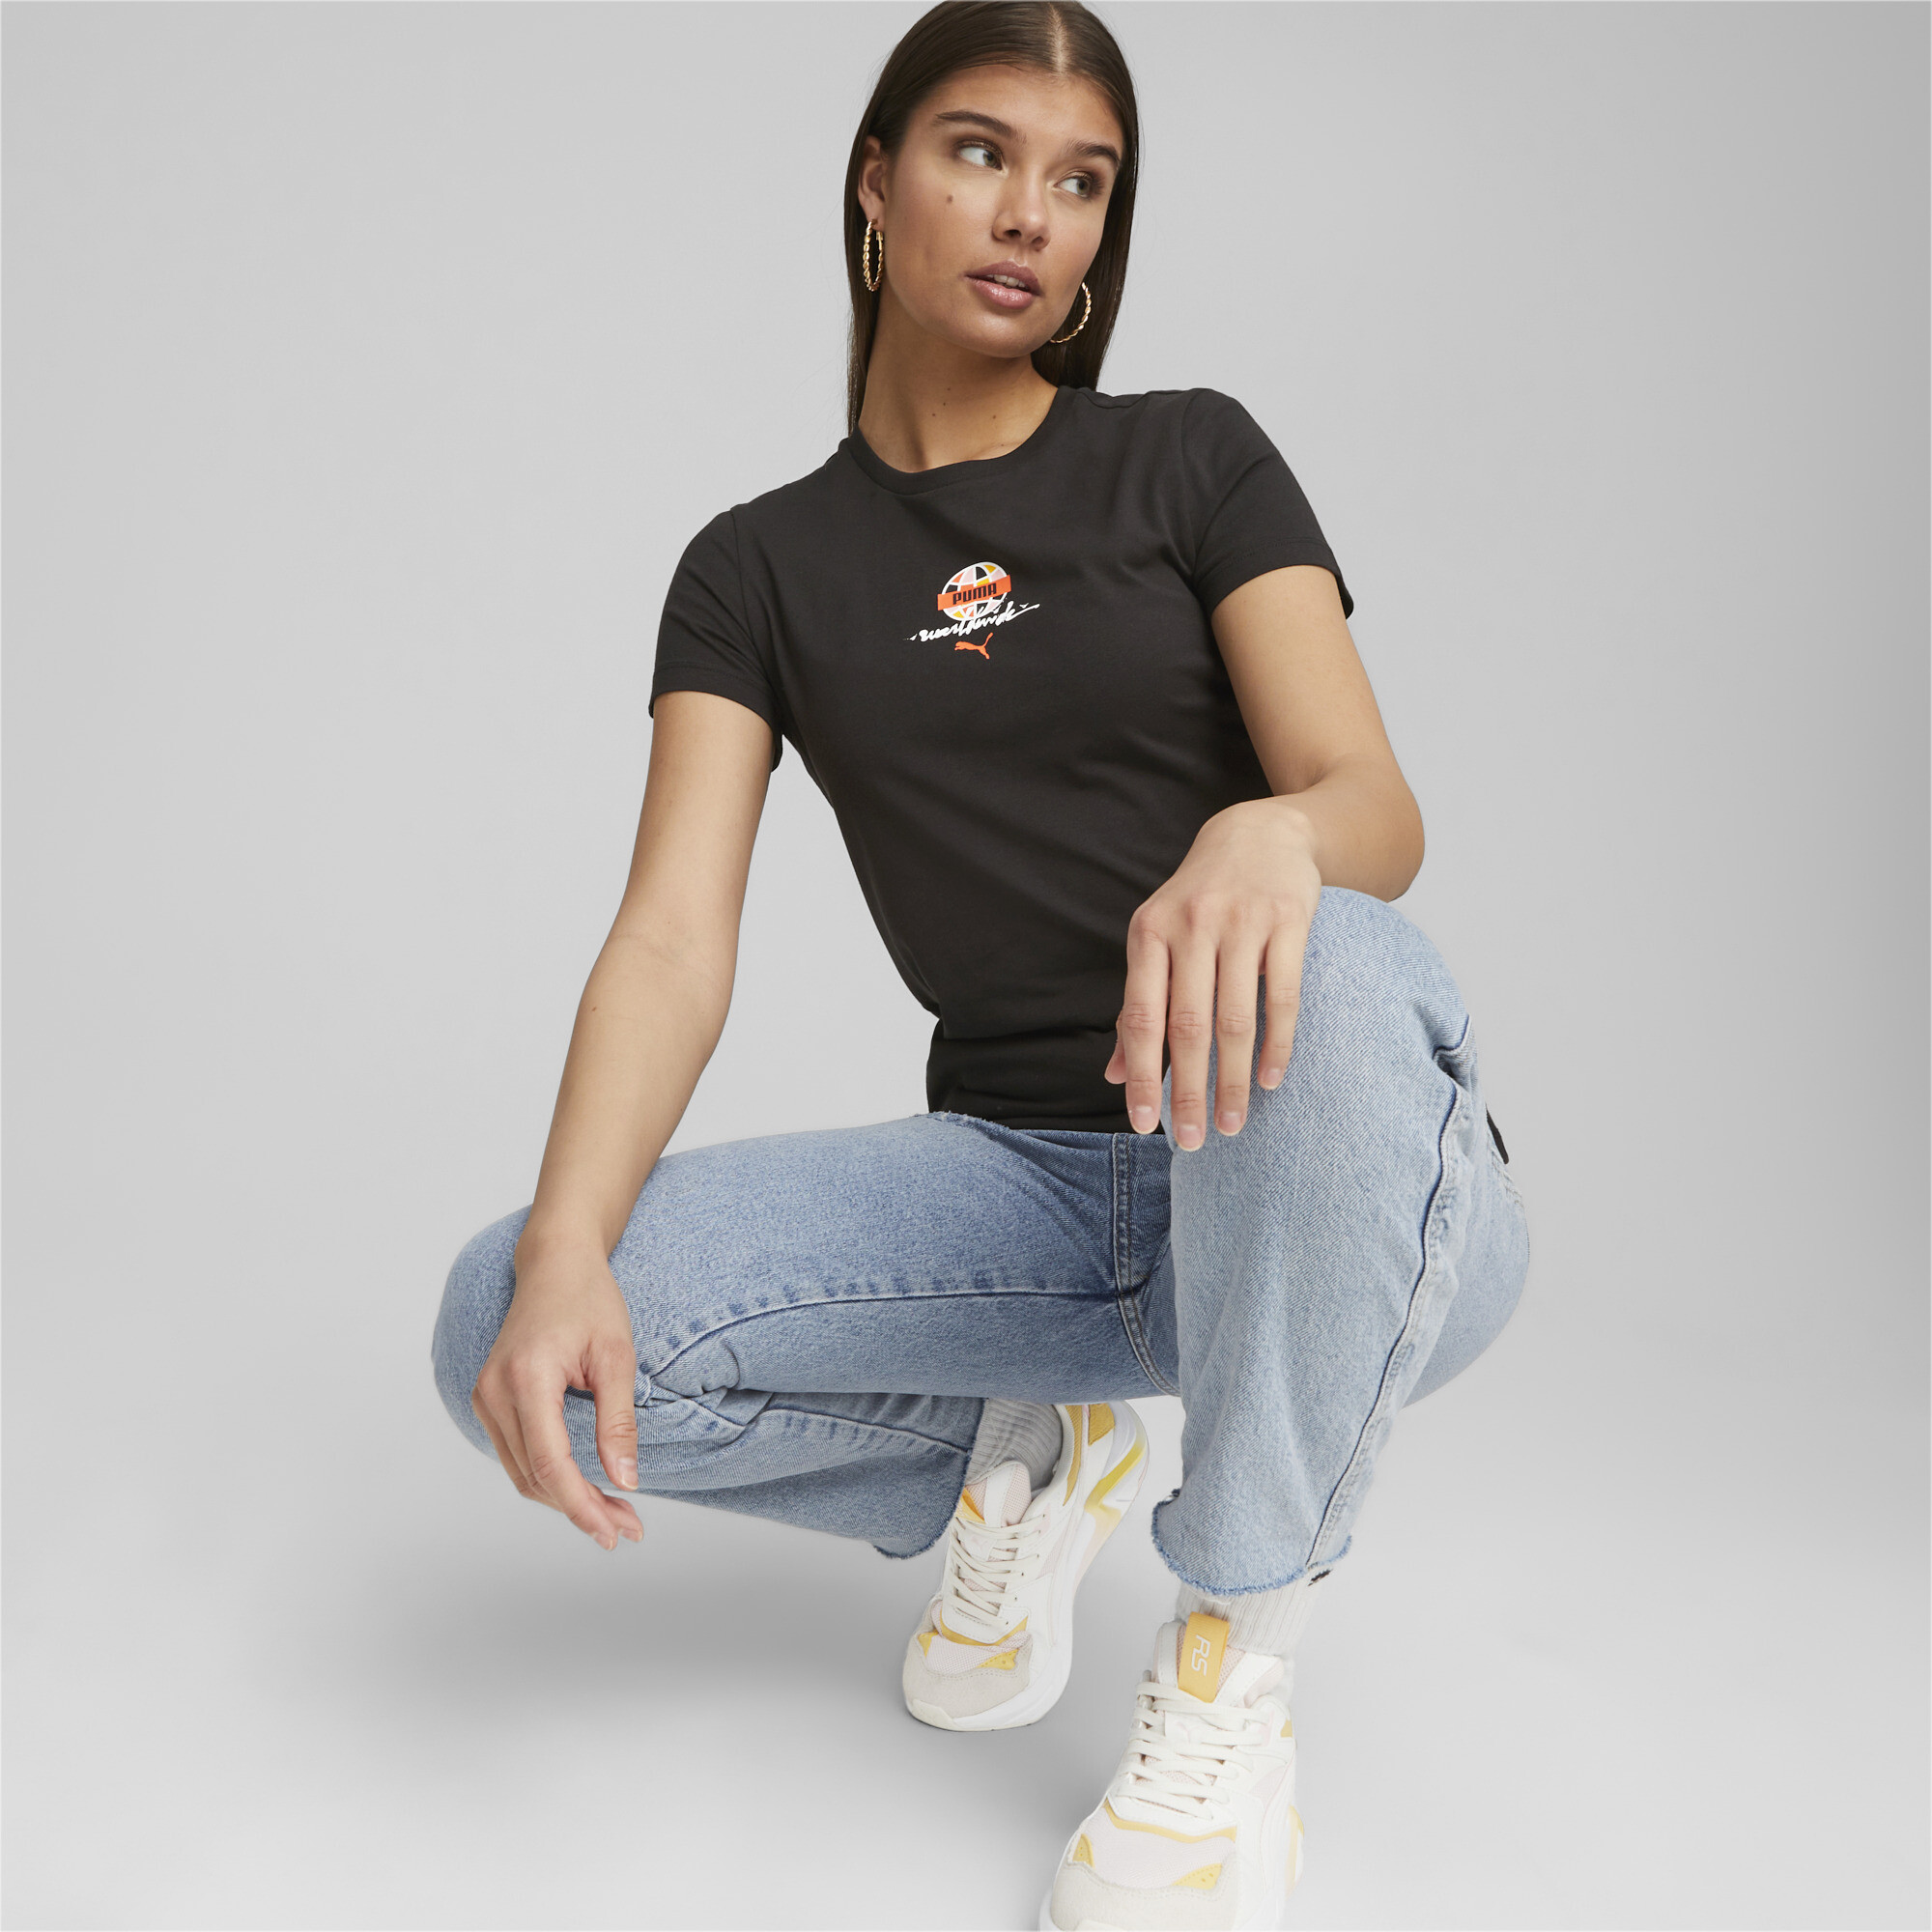 Women's Sportswear By PUMA Graphic T-Shirt In Black, Size 2X-Small